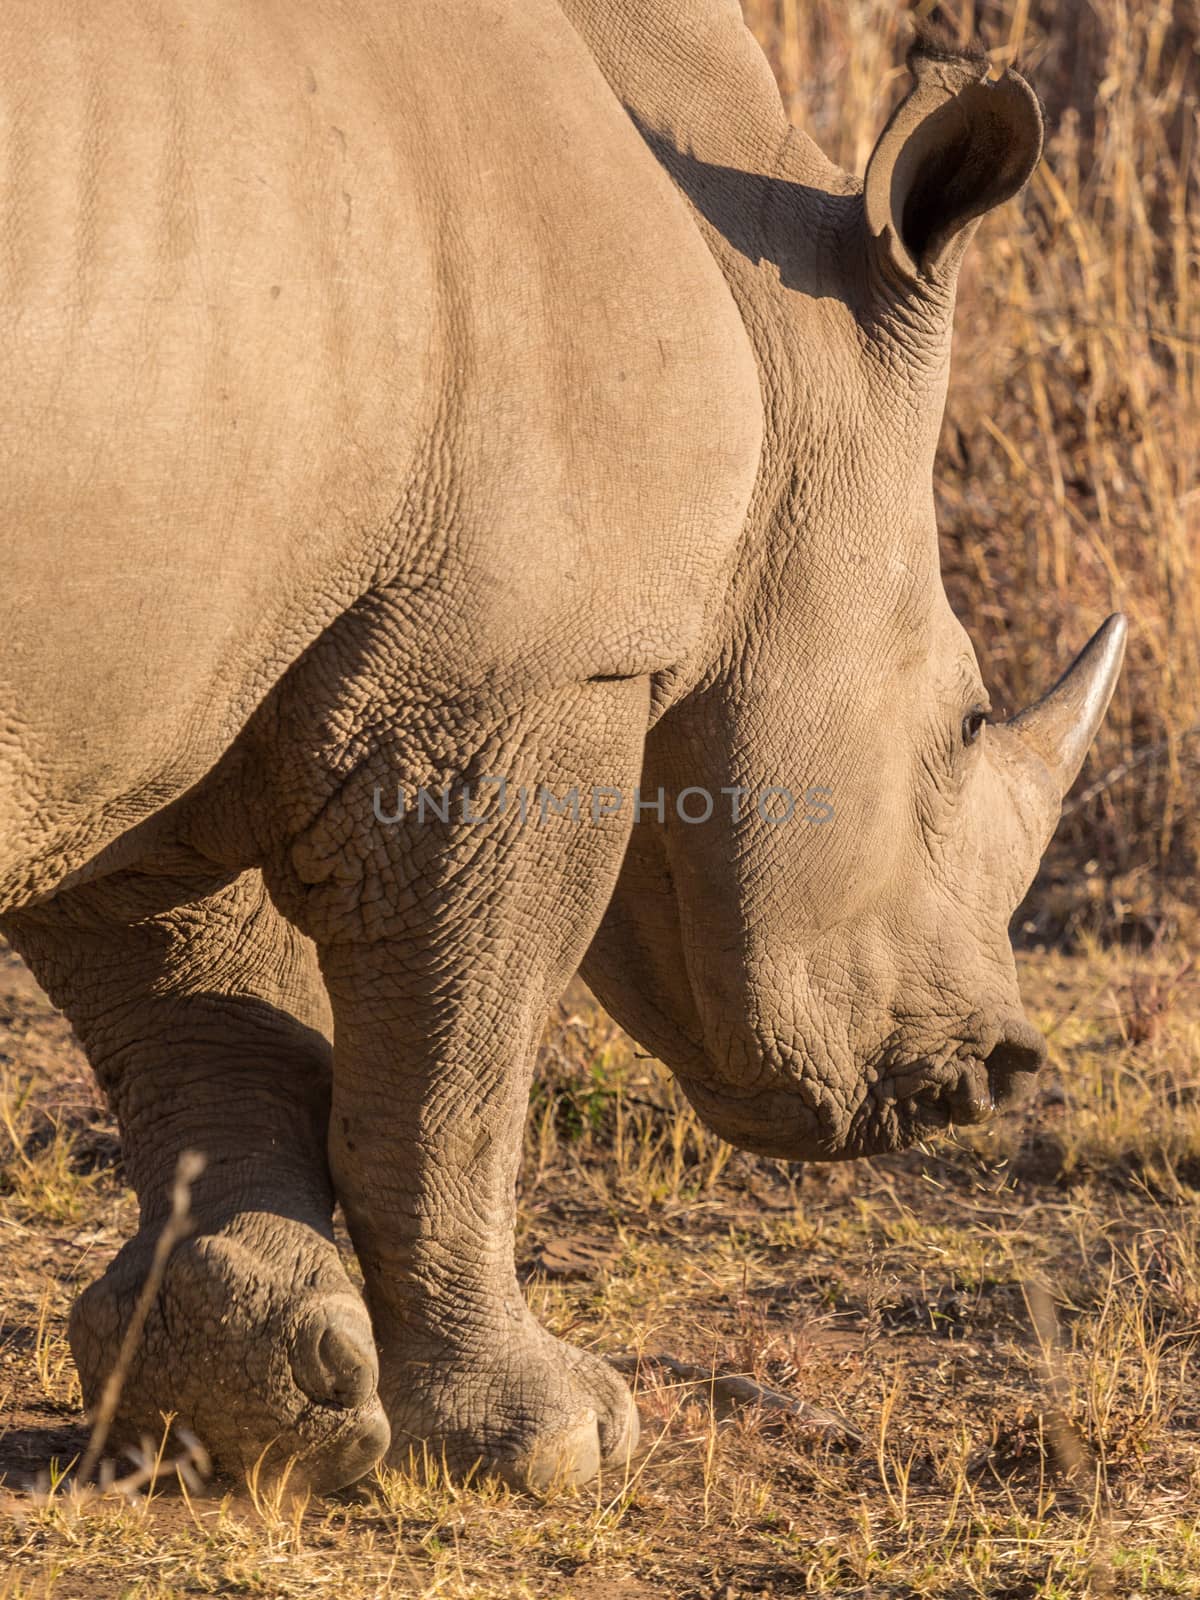 A rhino grazing by derejeb